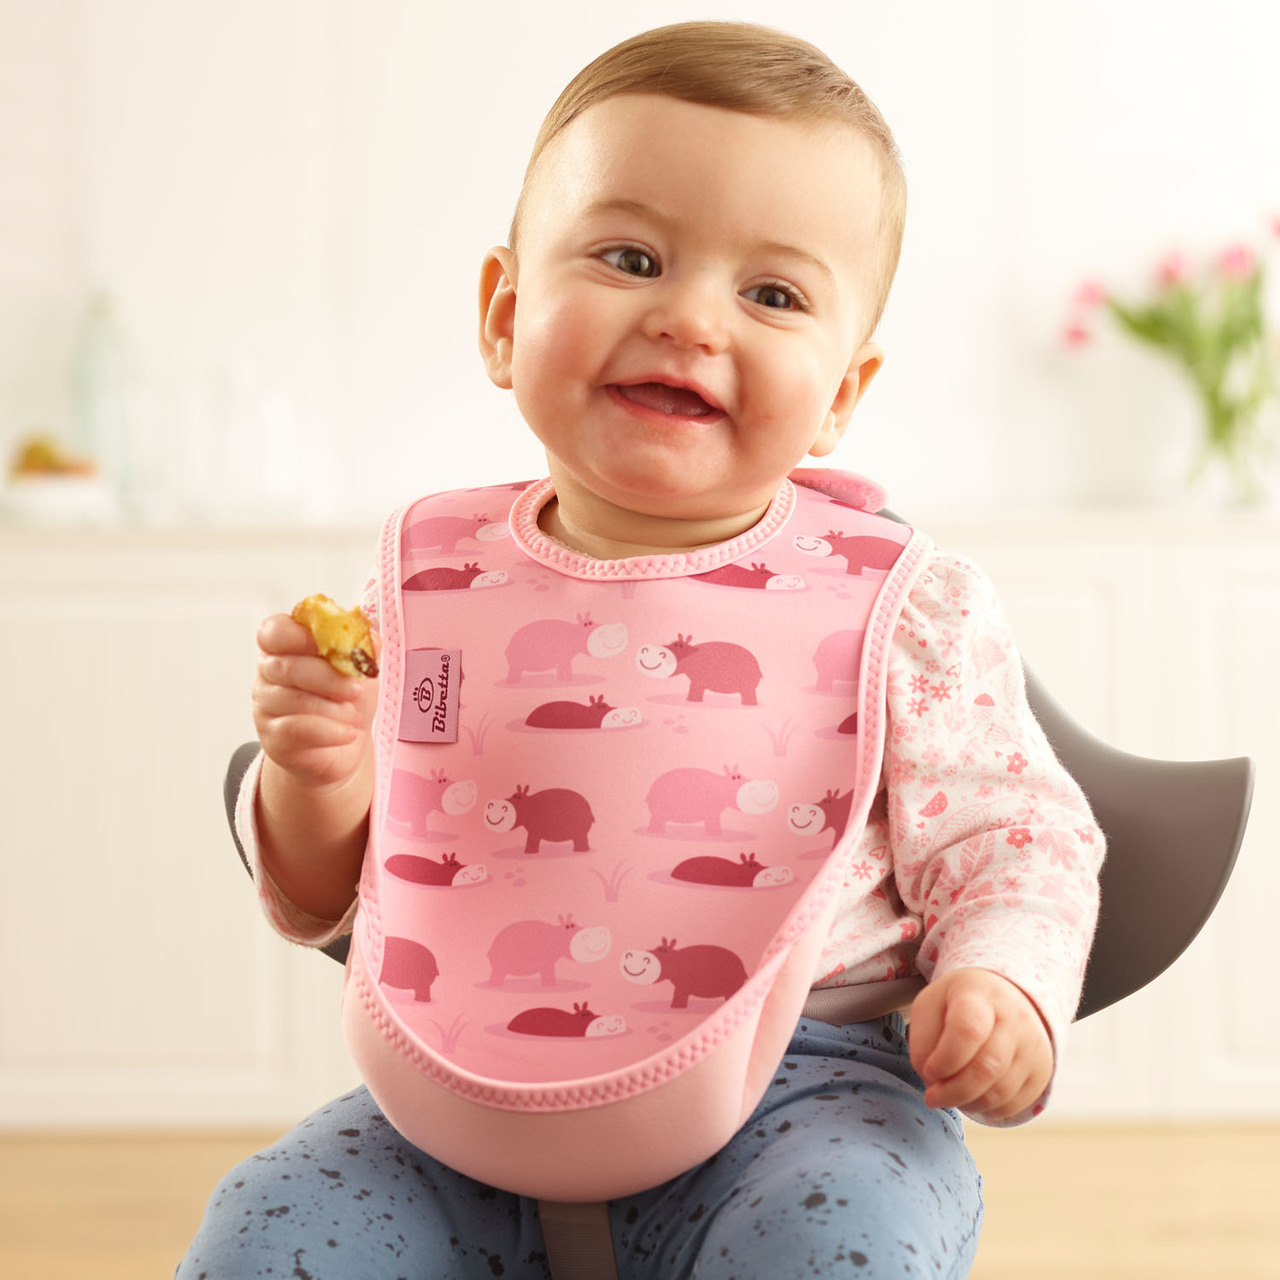 Baby wearing a Bibetta neoprene Ultrabib baby and child's bib with fold forwardpelican pocket in pink Hippos print